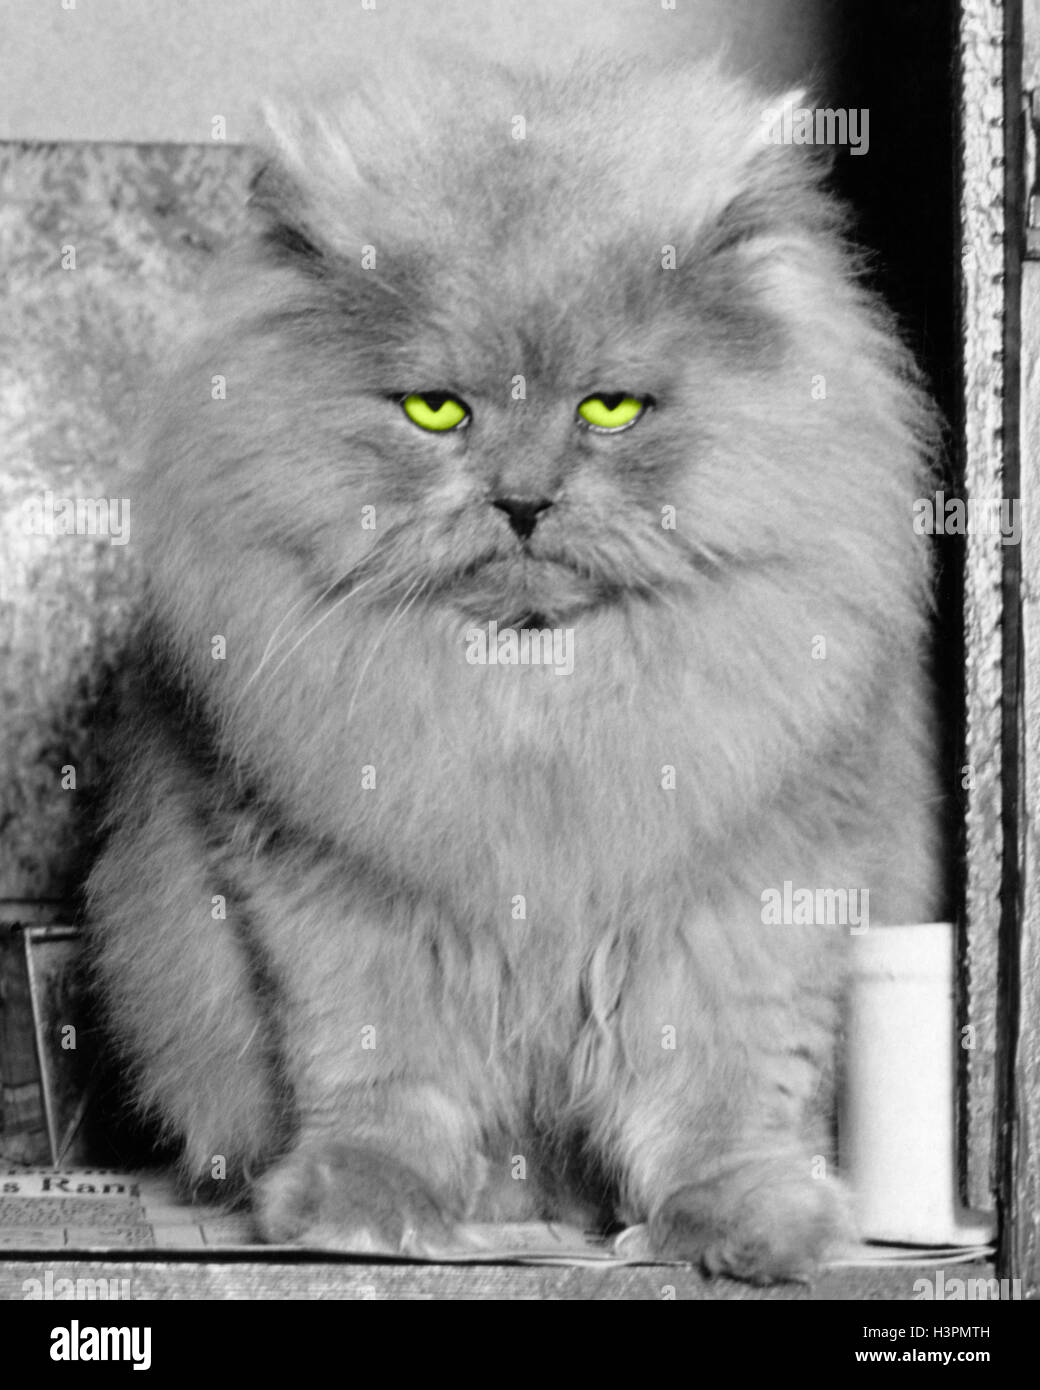 1940s LONG HAIR BLUE PERSIAN CAT LOOKING AT CAMERA WITH A ...